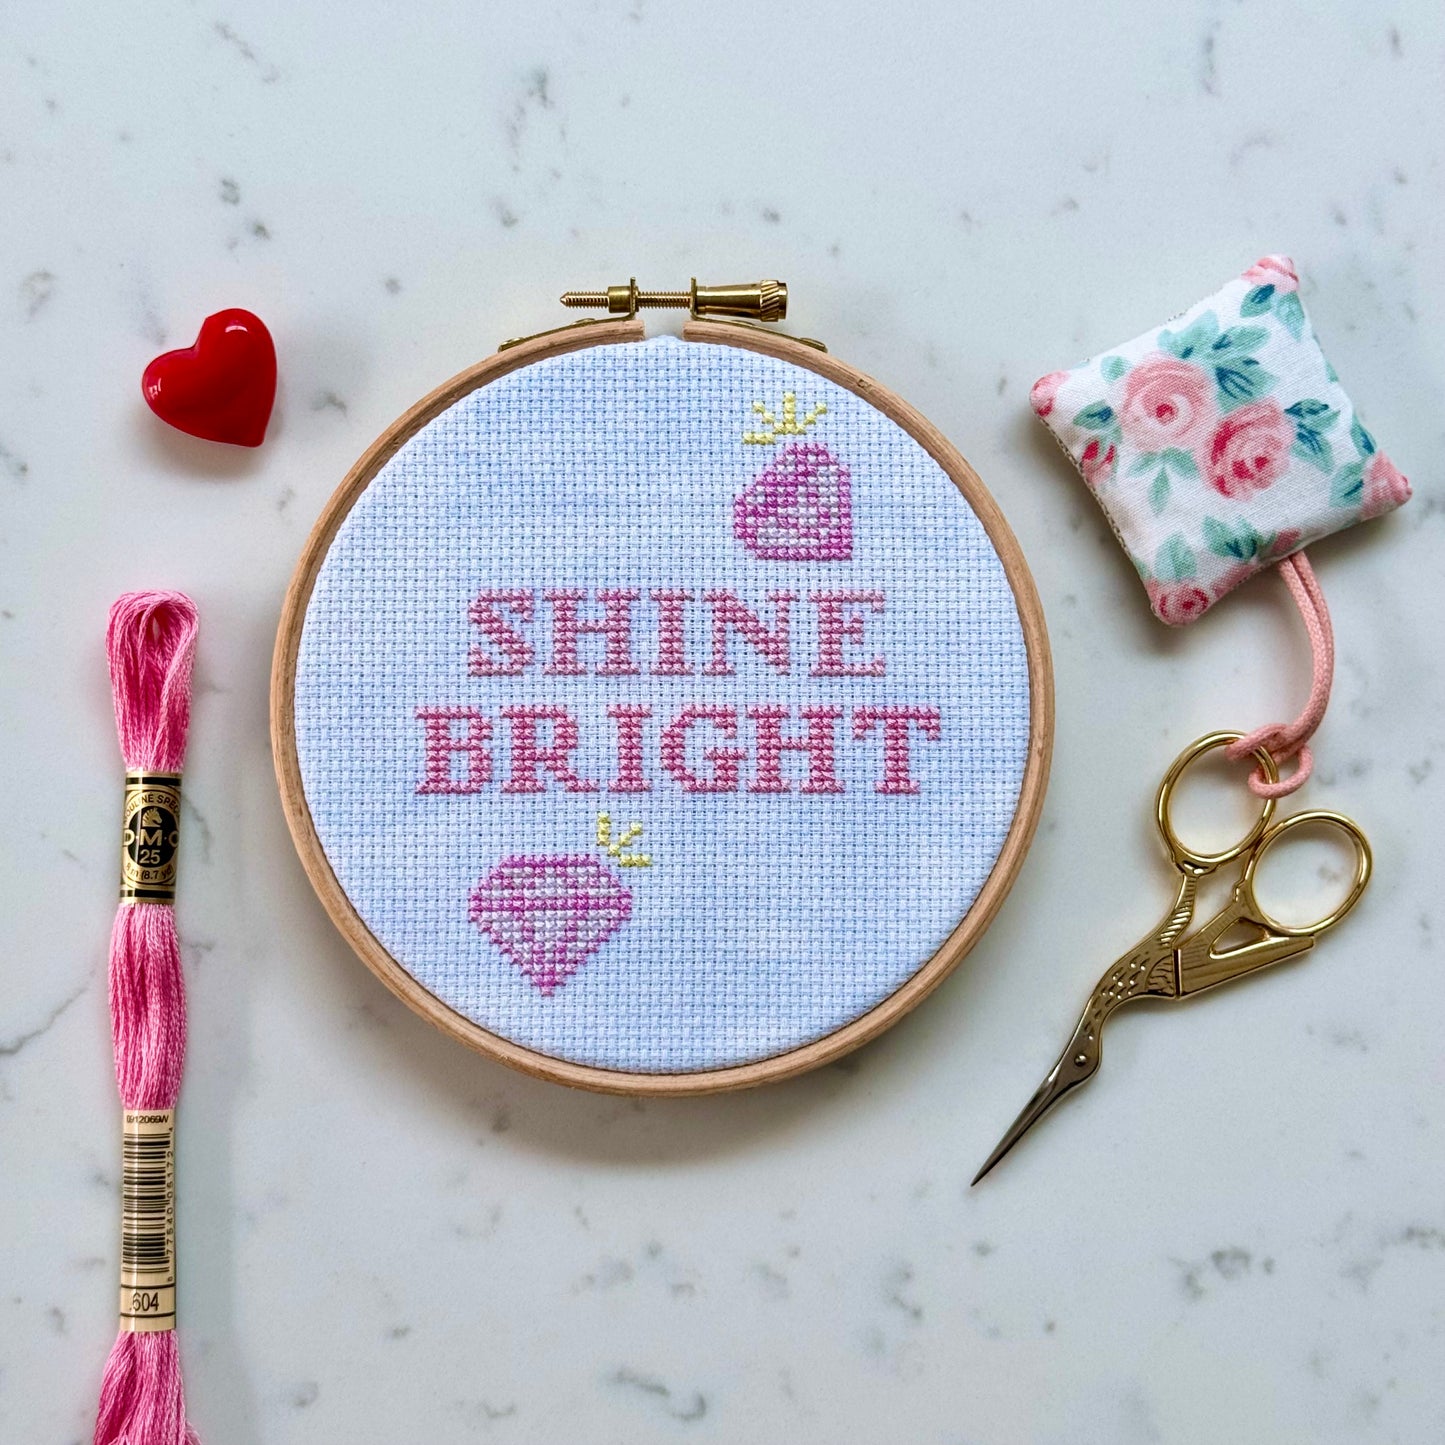 Shine Bright Cross Stitch Pattern – PDF Download